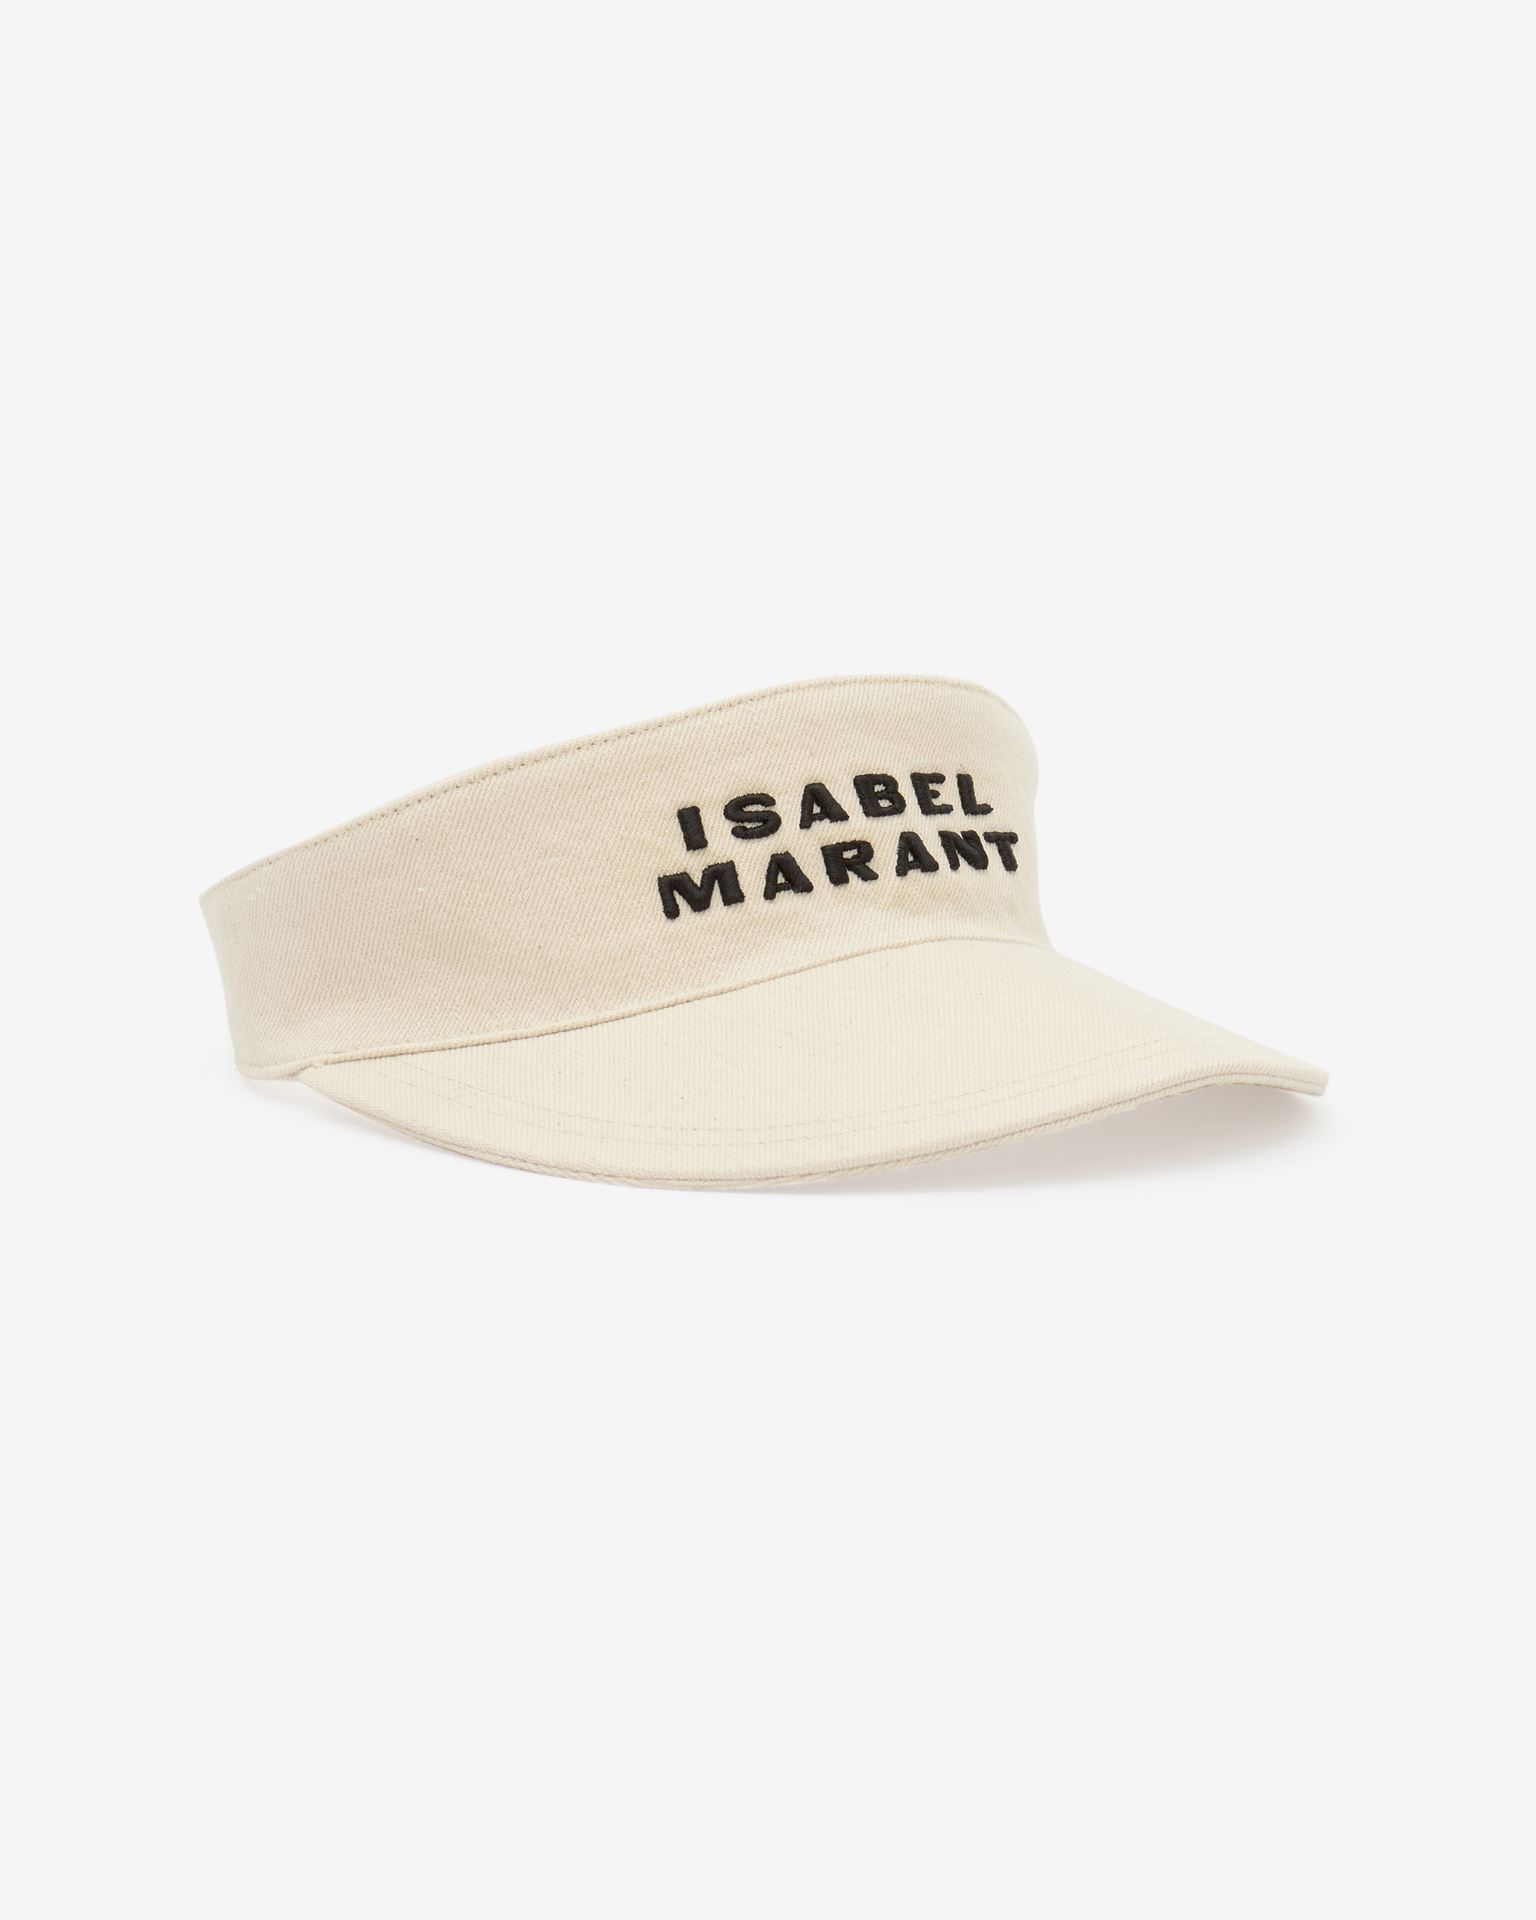 ISABEL MARANT TYRY LOGO CAP,46921193HH